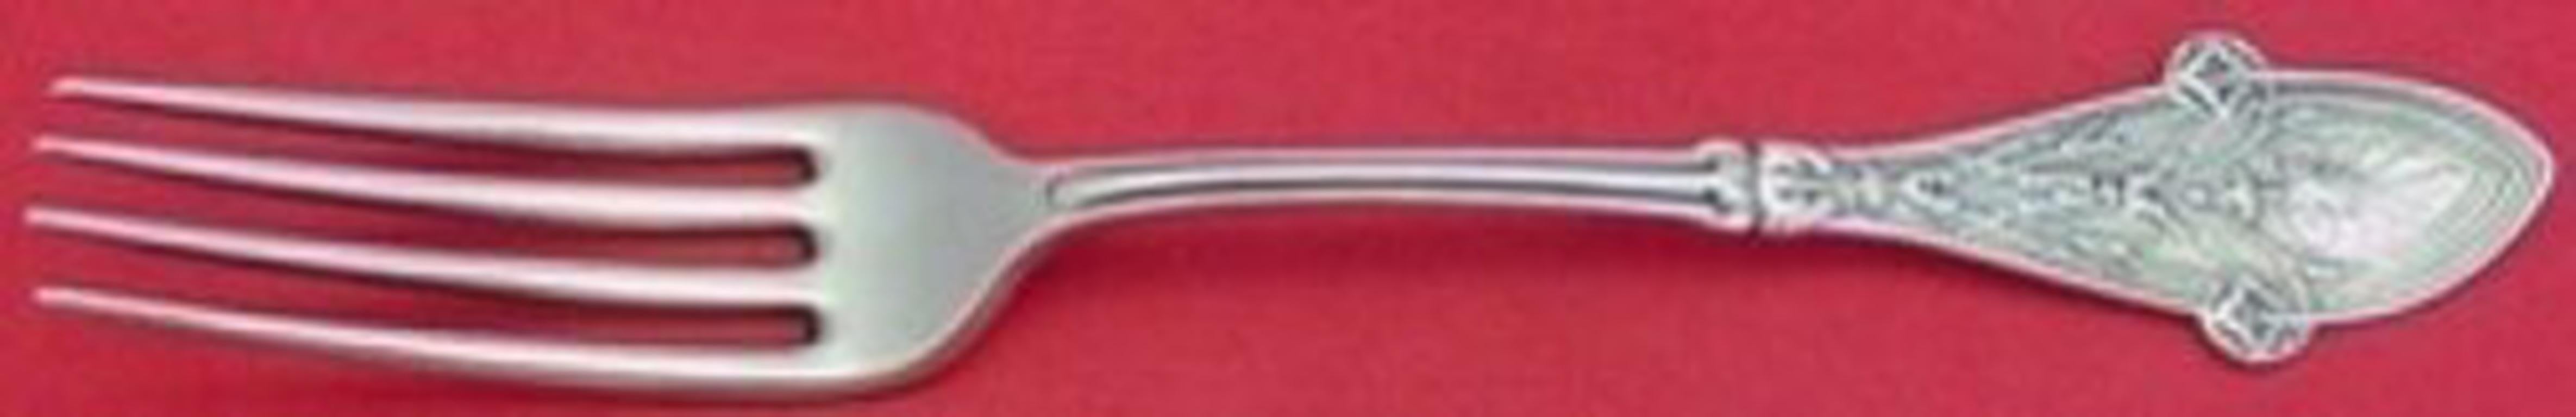 Sterling silver regular fork 7